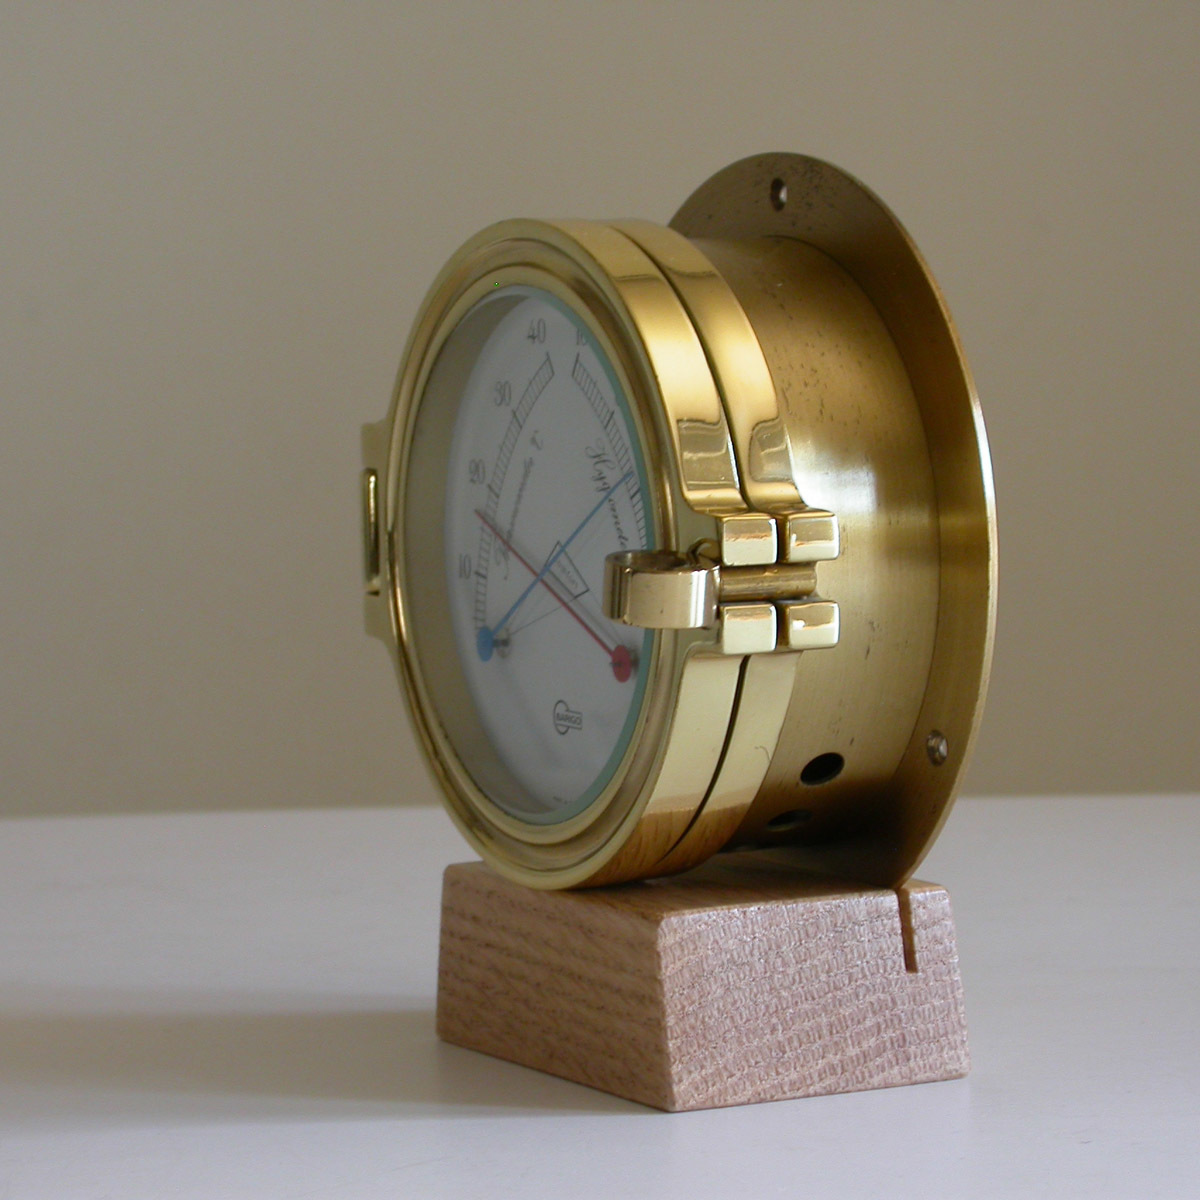 BARIGO burr go thermometer / hygrometer Φ12cm Germany made Vintage / brass chamfer glass . window ship meter 